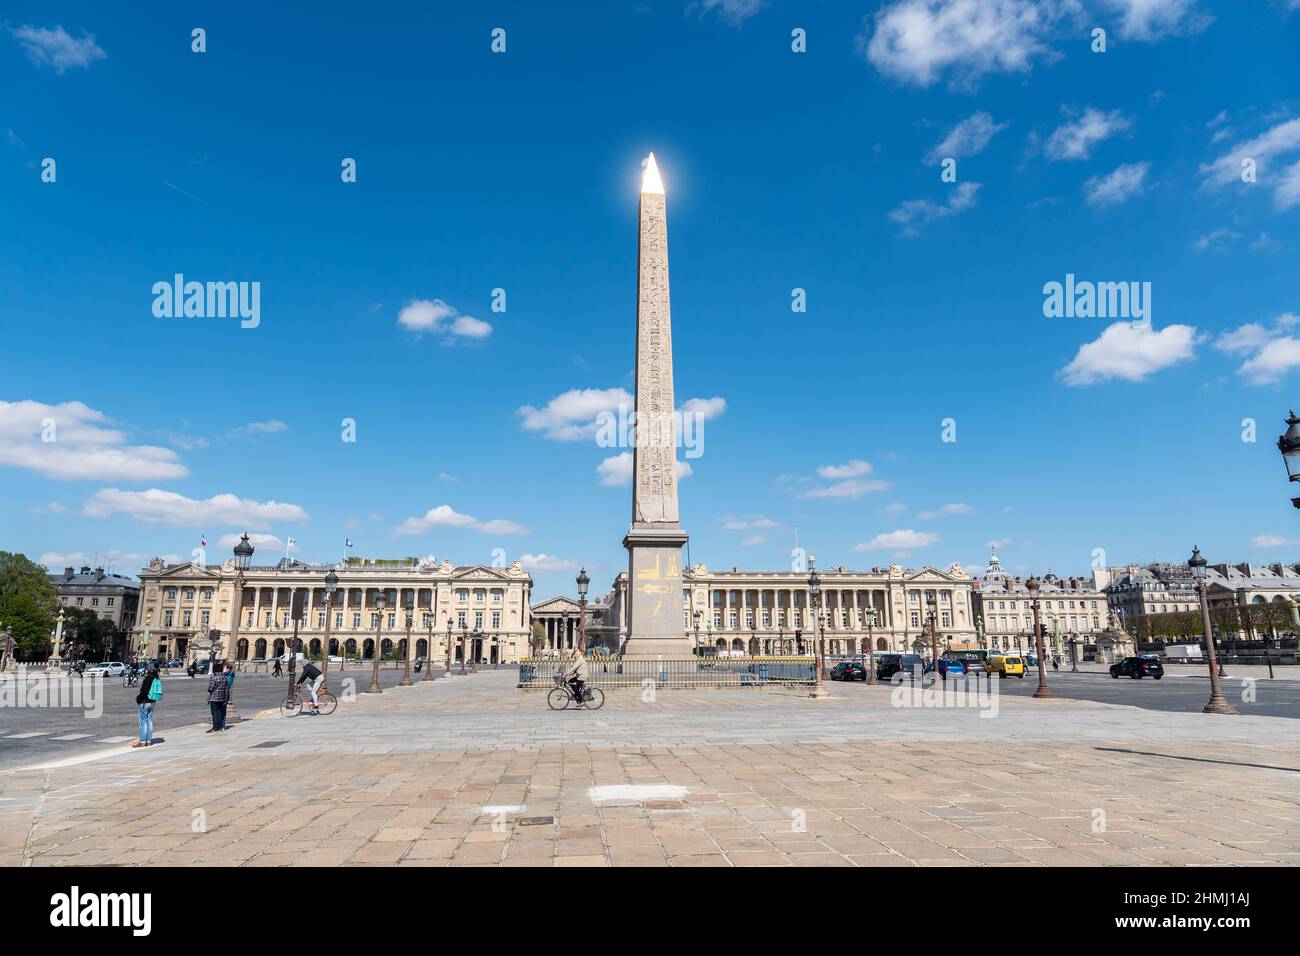 Luxor obelisk on place de la concorde in Paris Stock Photo